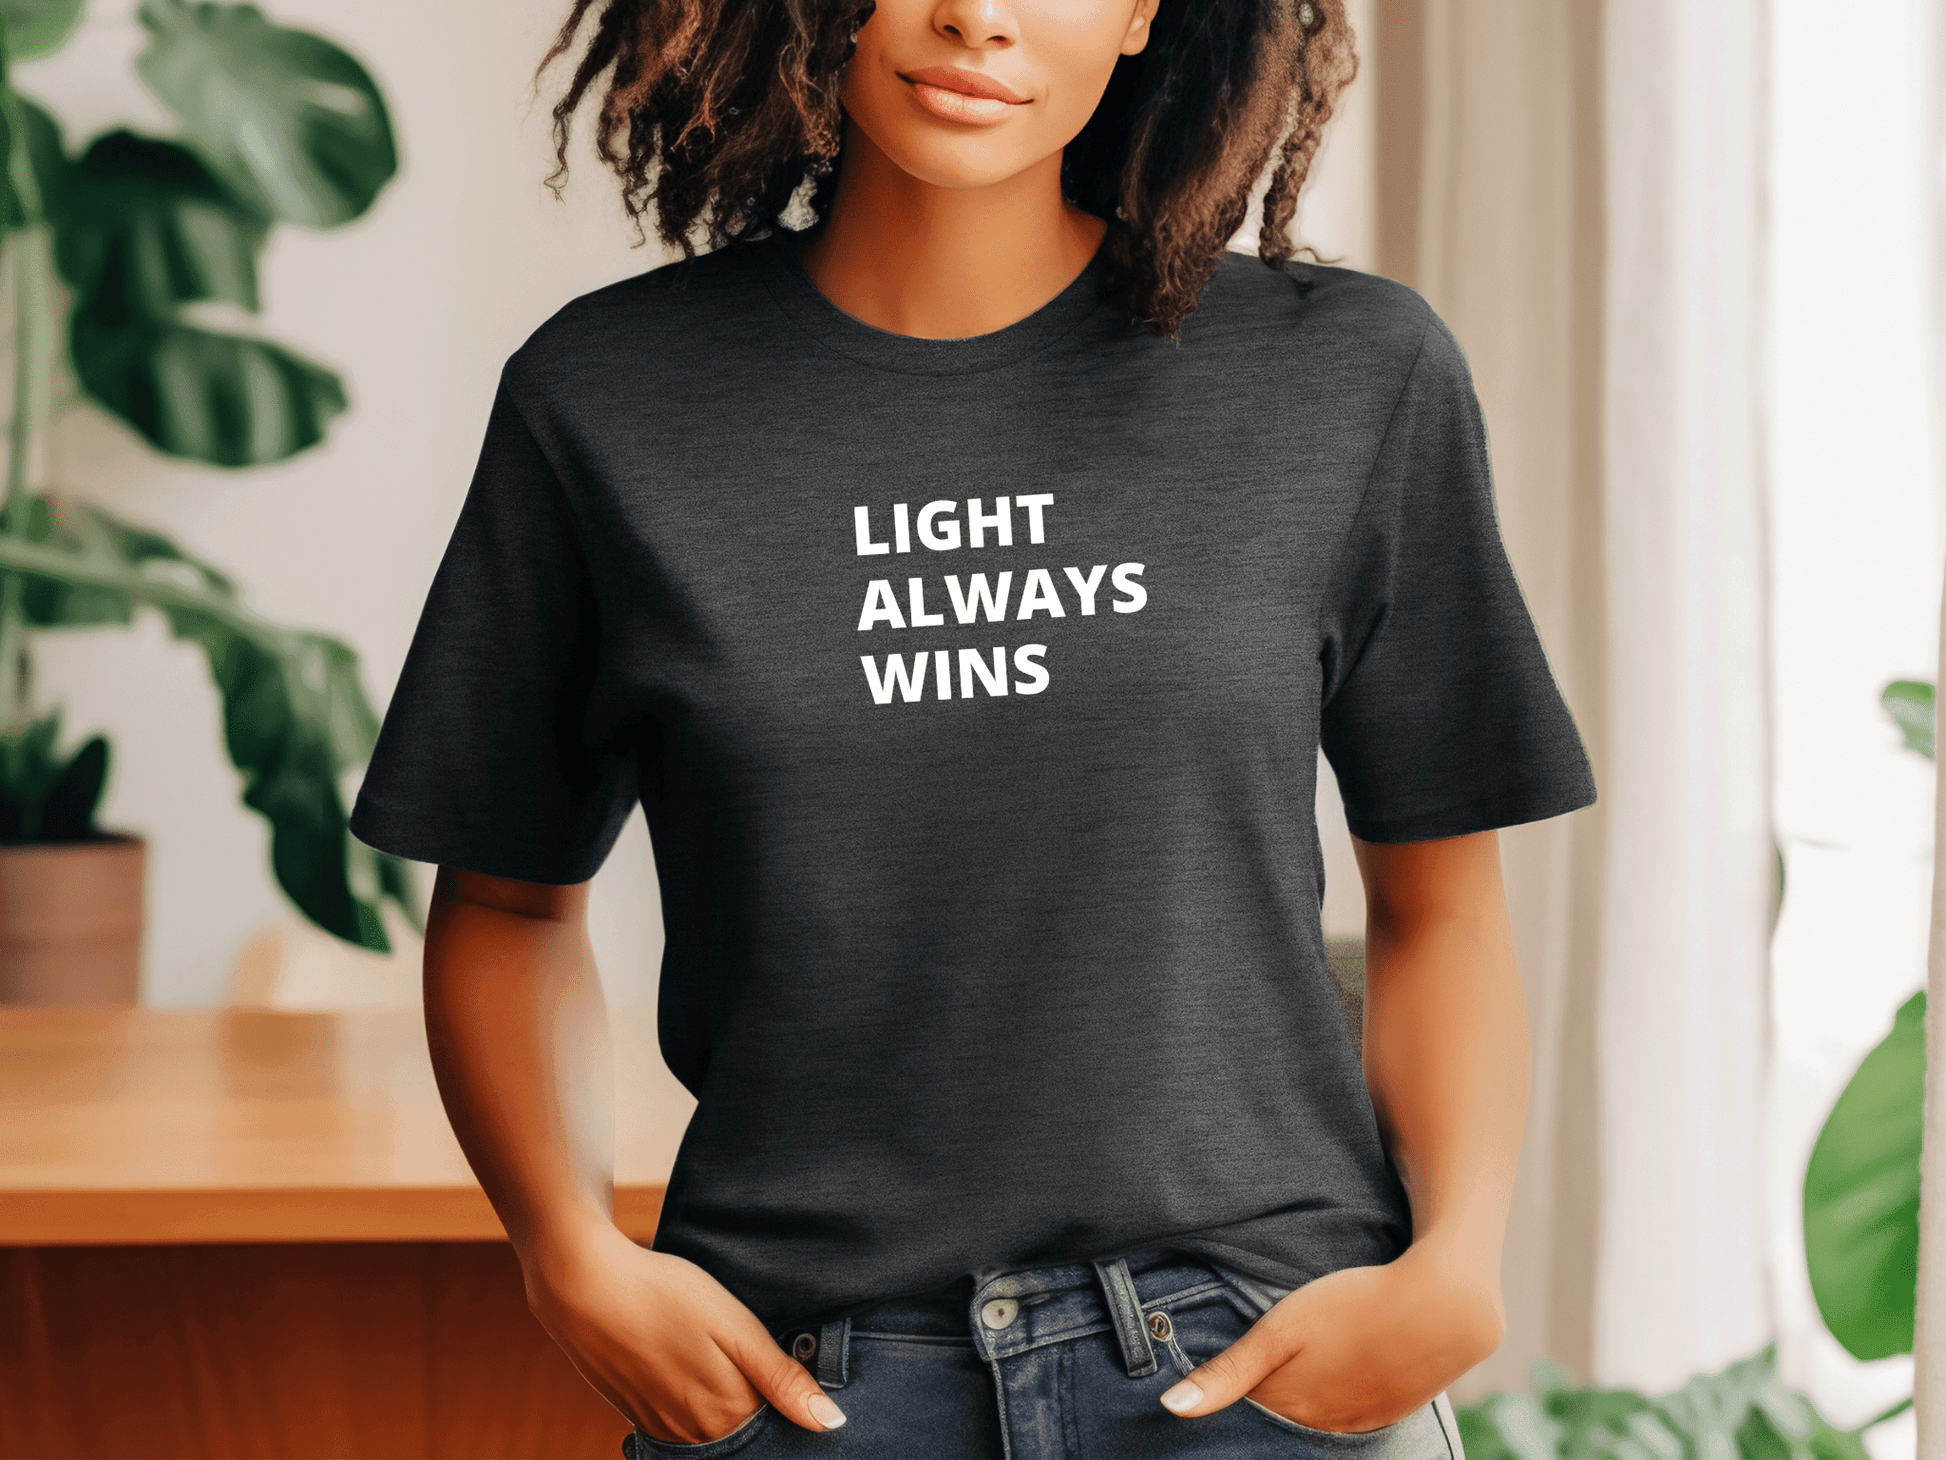 Light always wins - Soulshinecreators